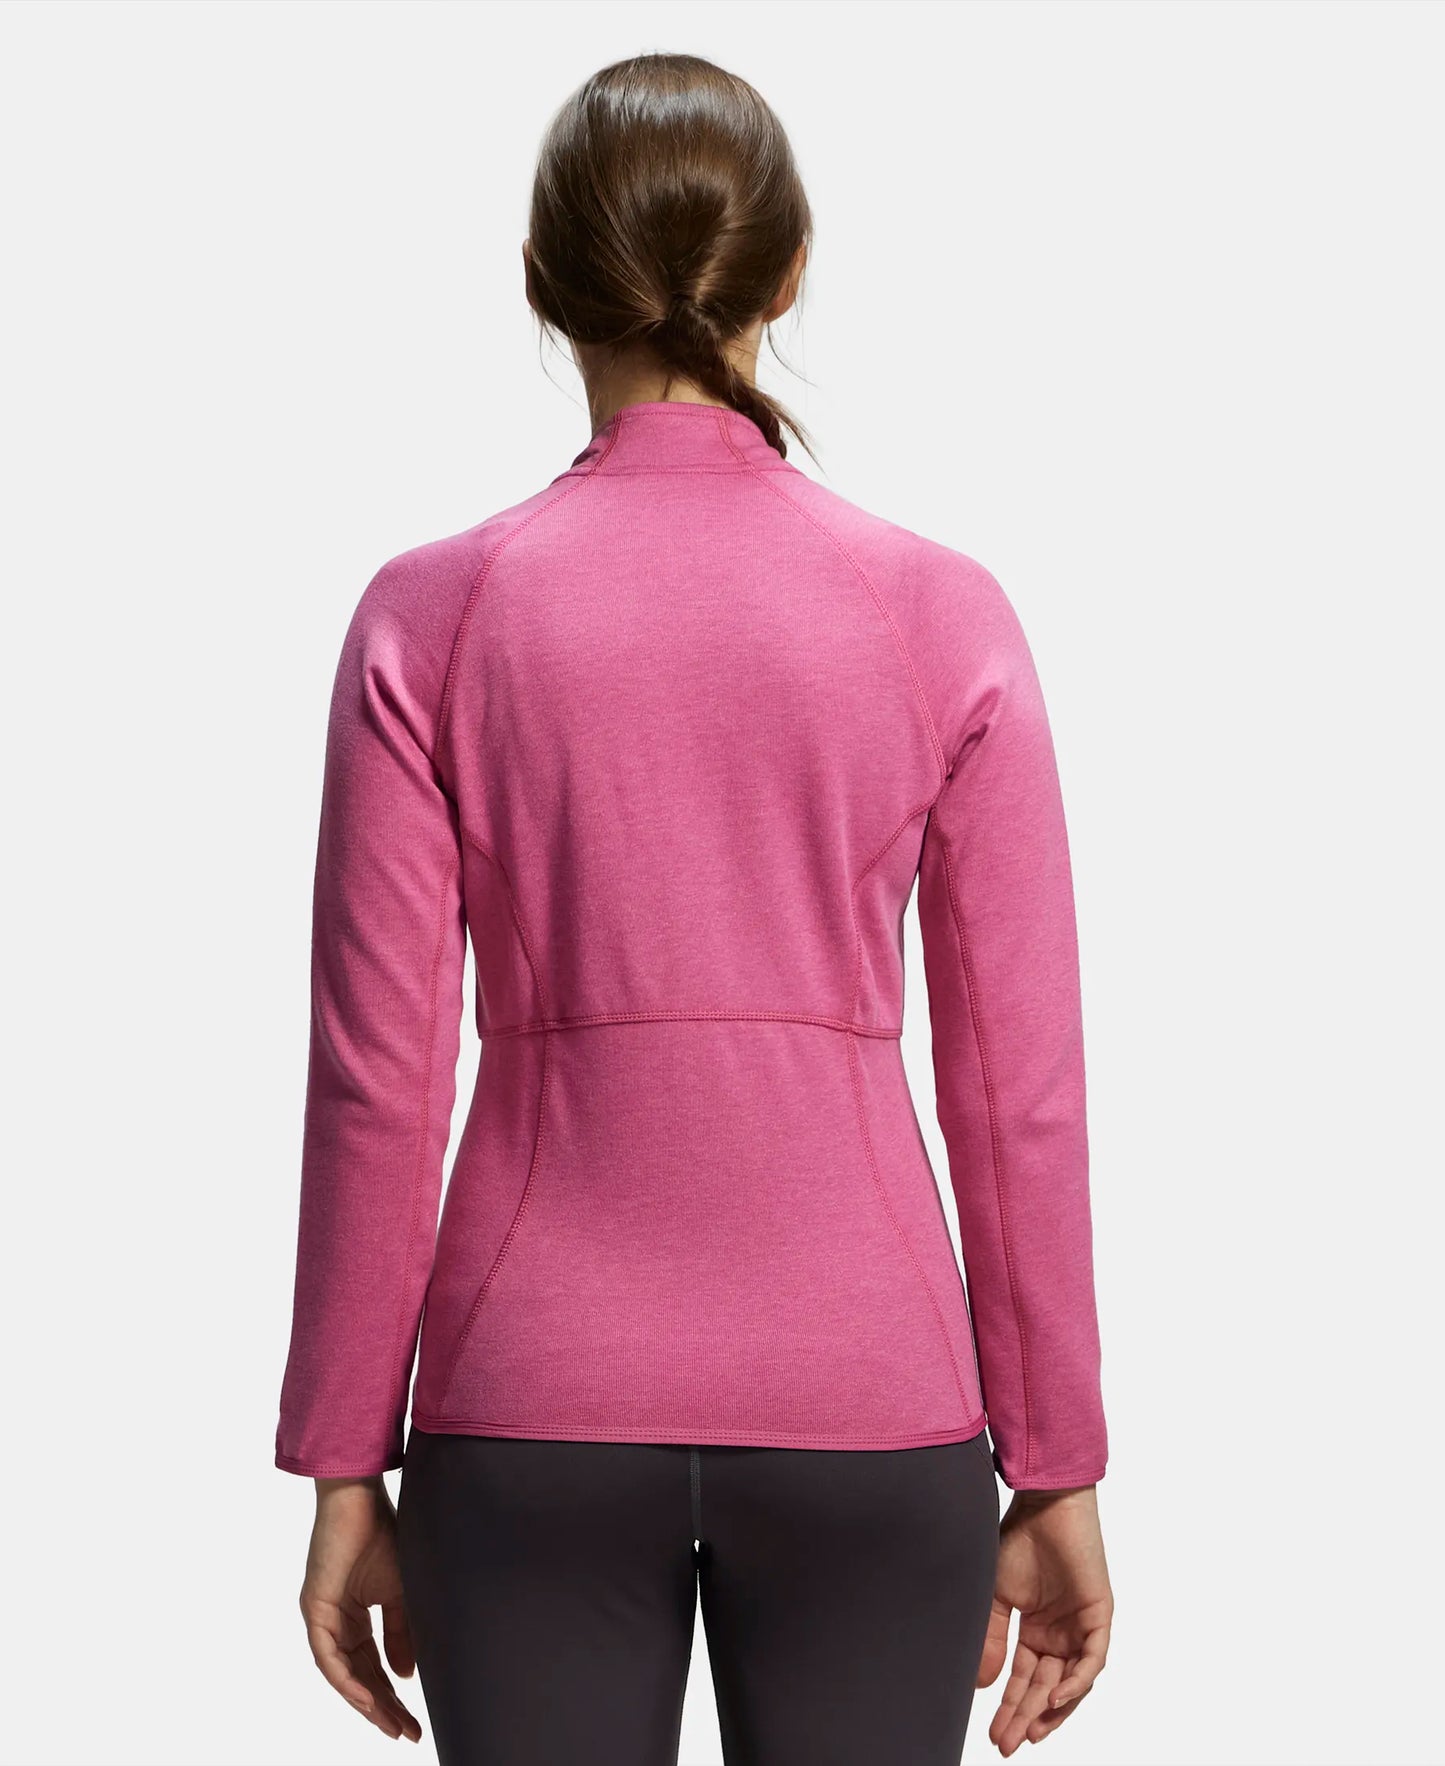 Polyester Cotton Interlock Slim Fit Full Zip High Neck Jacket with Convenient Zipper Pockets - Ibis Rose Melange-3